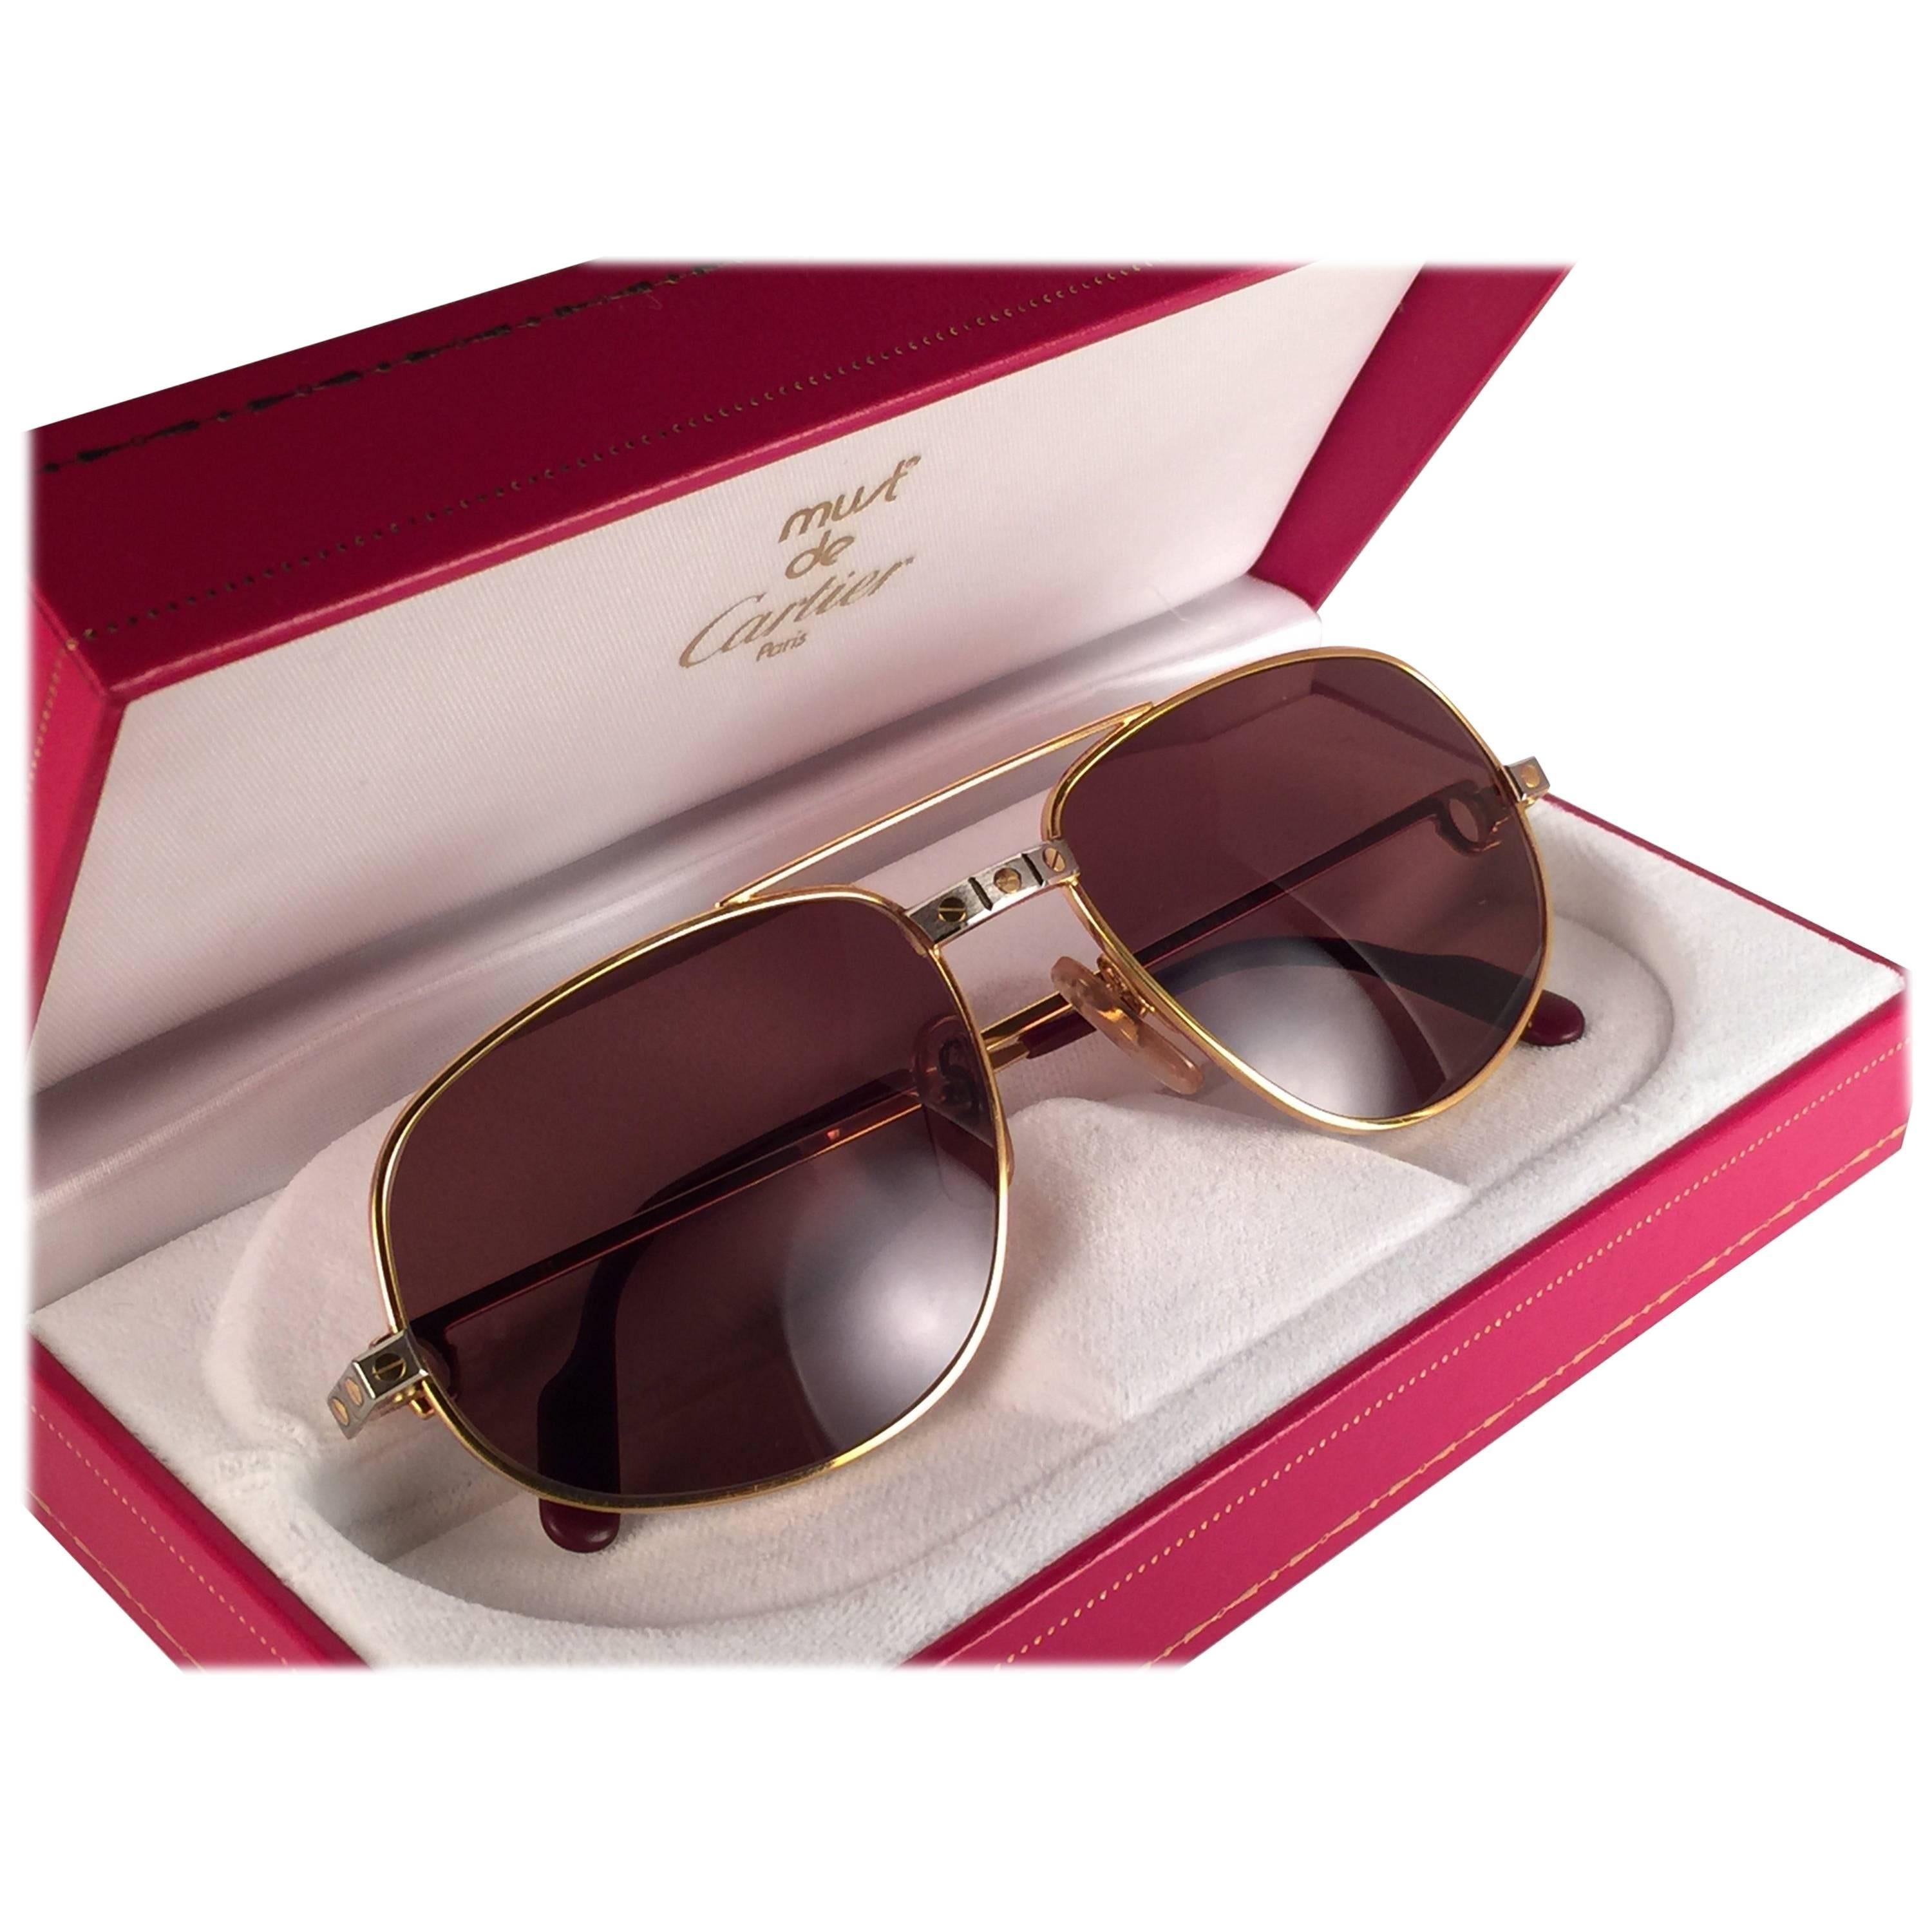 New Vintage Cartier Romance Santos 58MM France 18k Gold Plated Sunglasses